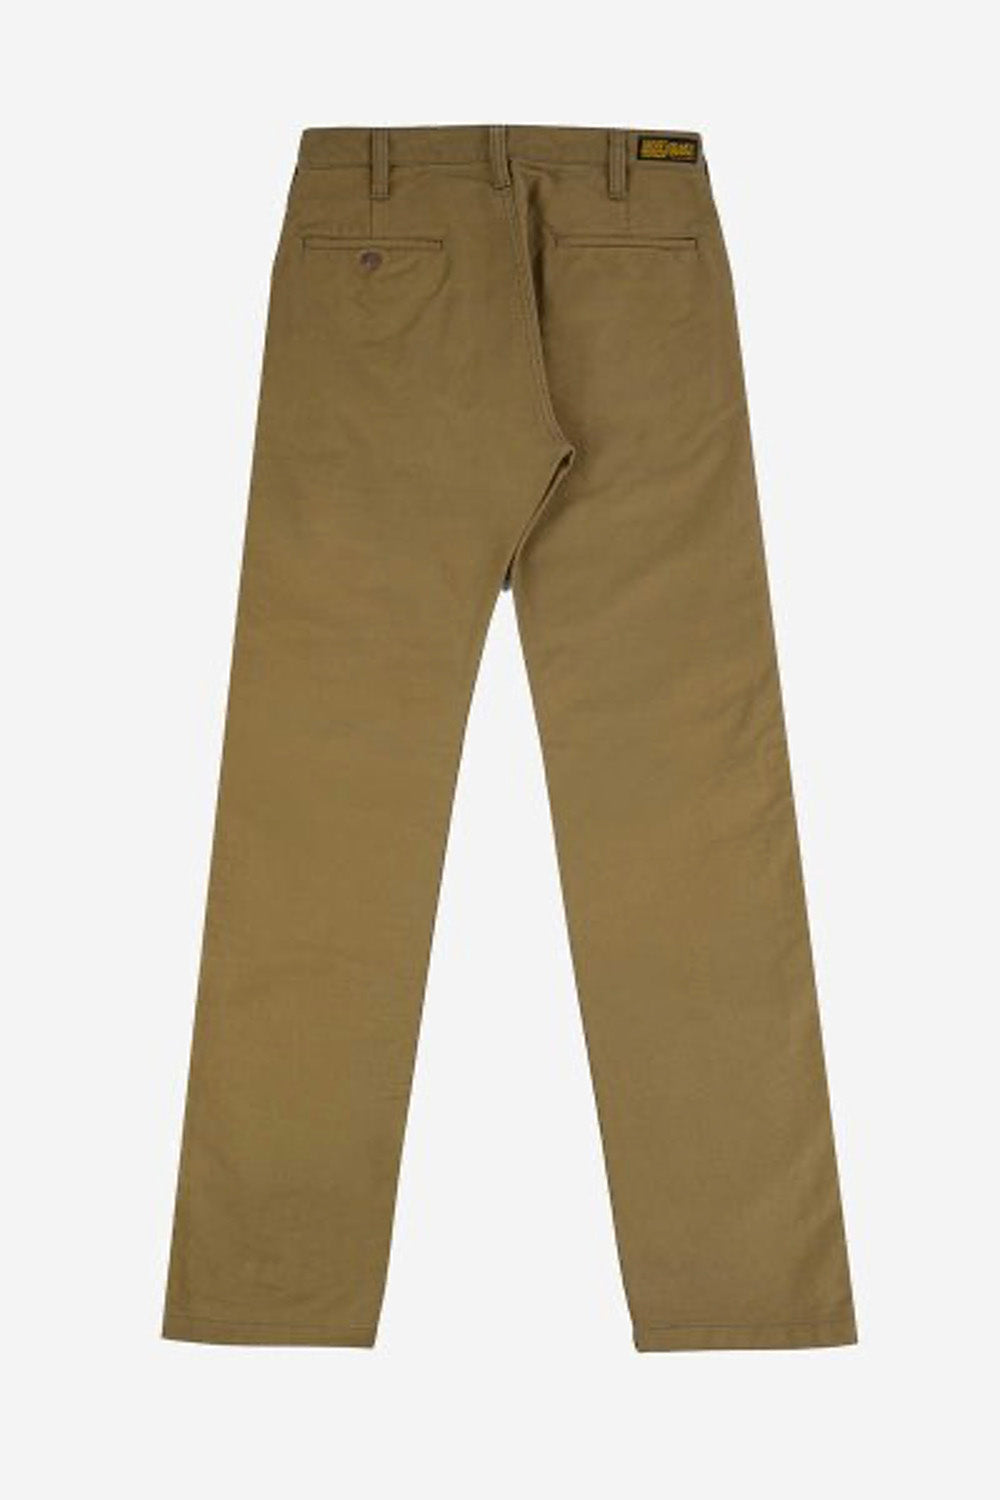 IH-720-KHA - 11oz Cotton Whipcord Work Pants - Khaki | James Dant